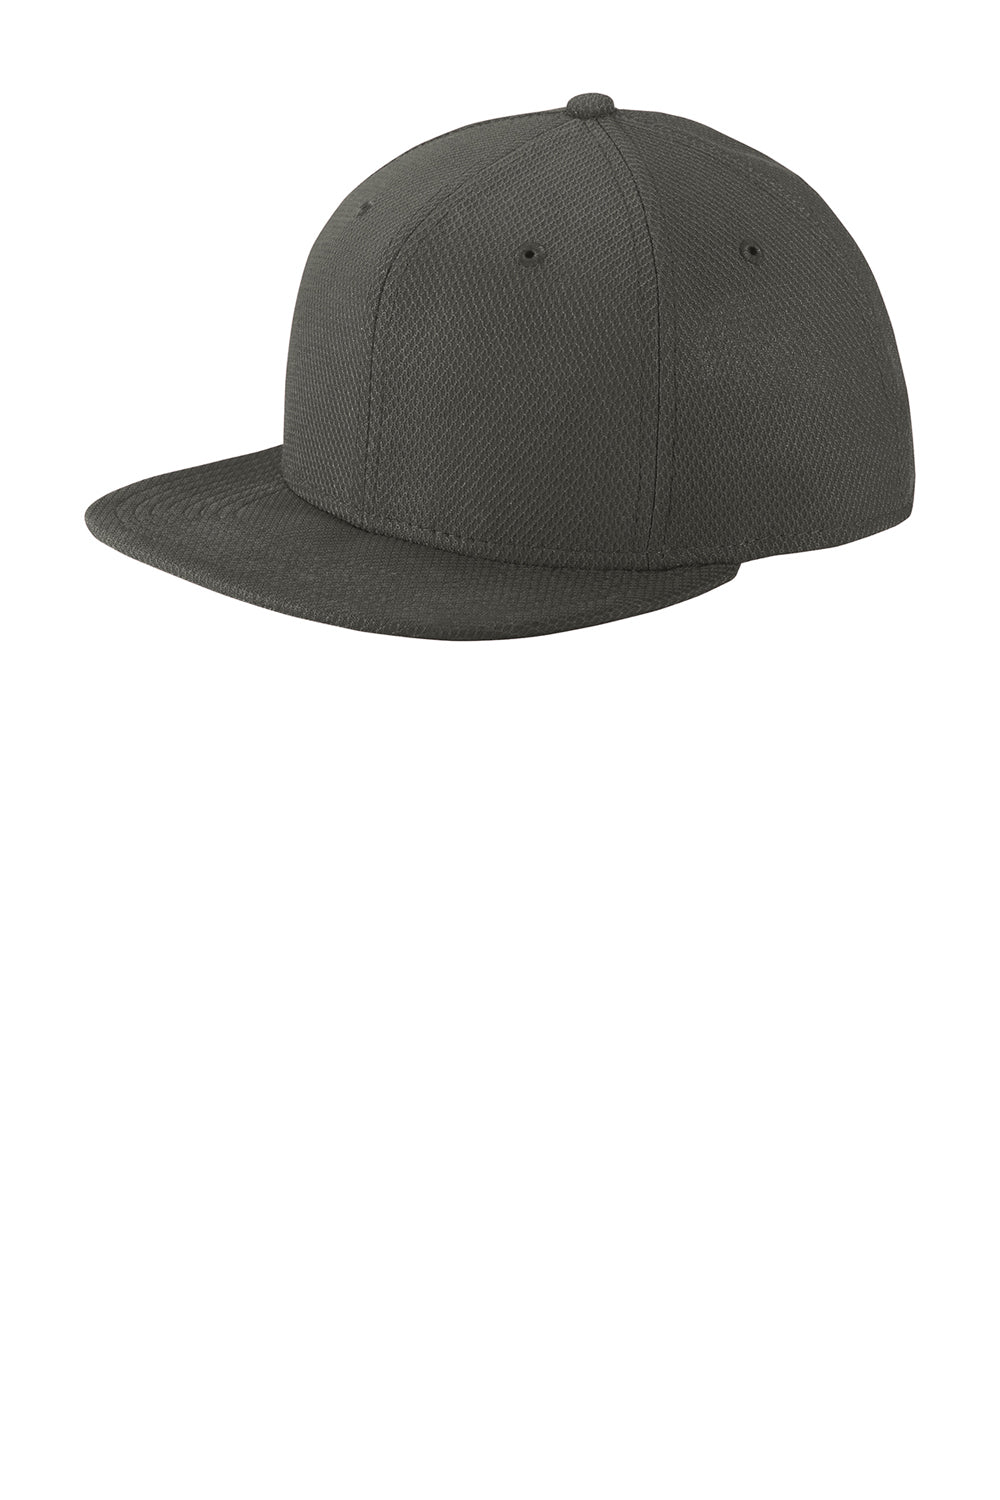 New Era NE404 Mens Moisture Wicking Adjustable Hat Graphite Grey Front